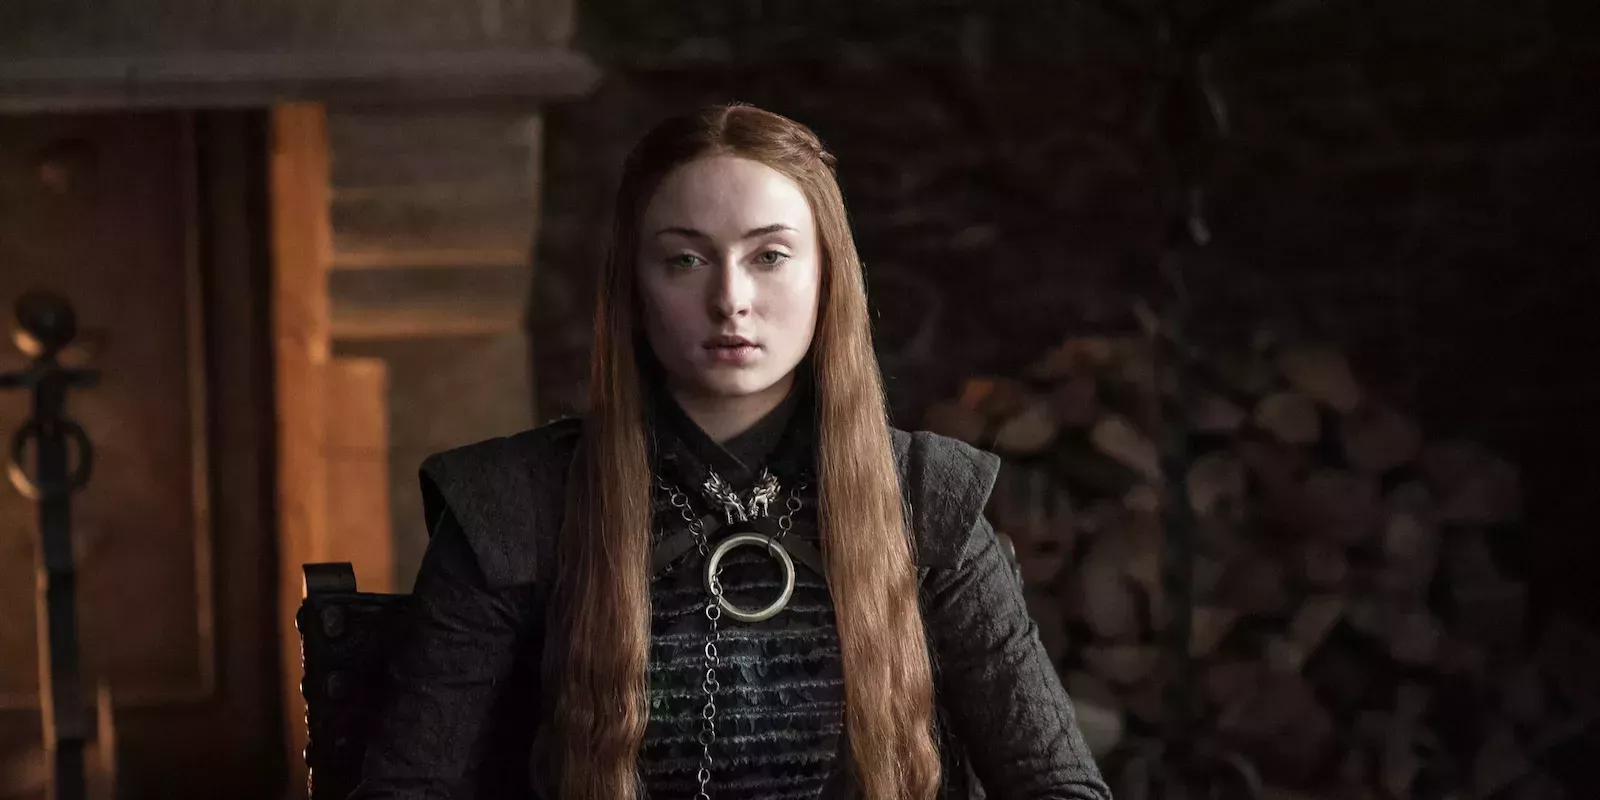 Sansa Stark in her black dress at Winterfell in Game of Thrones.